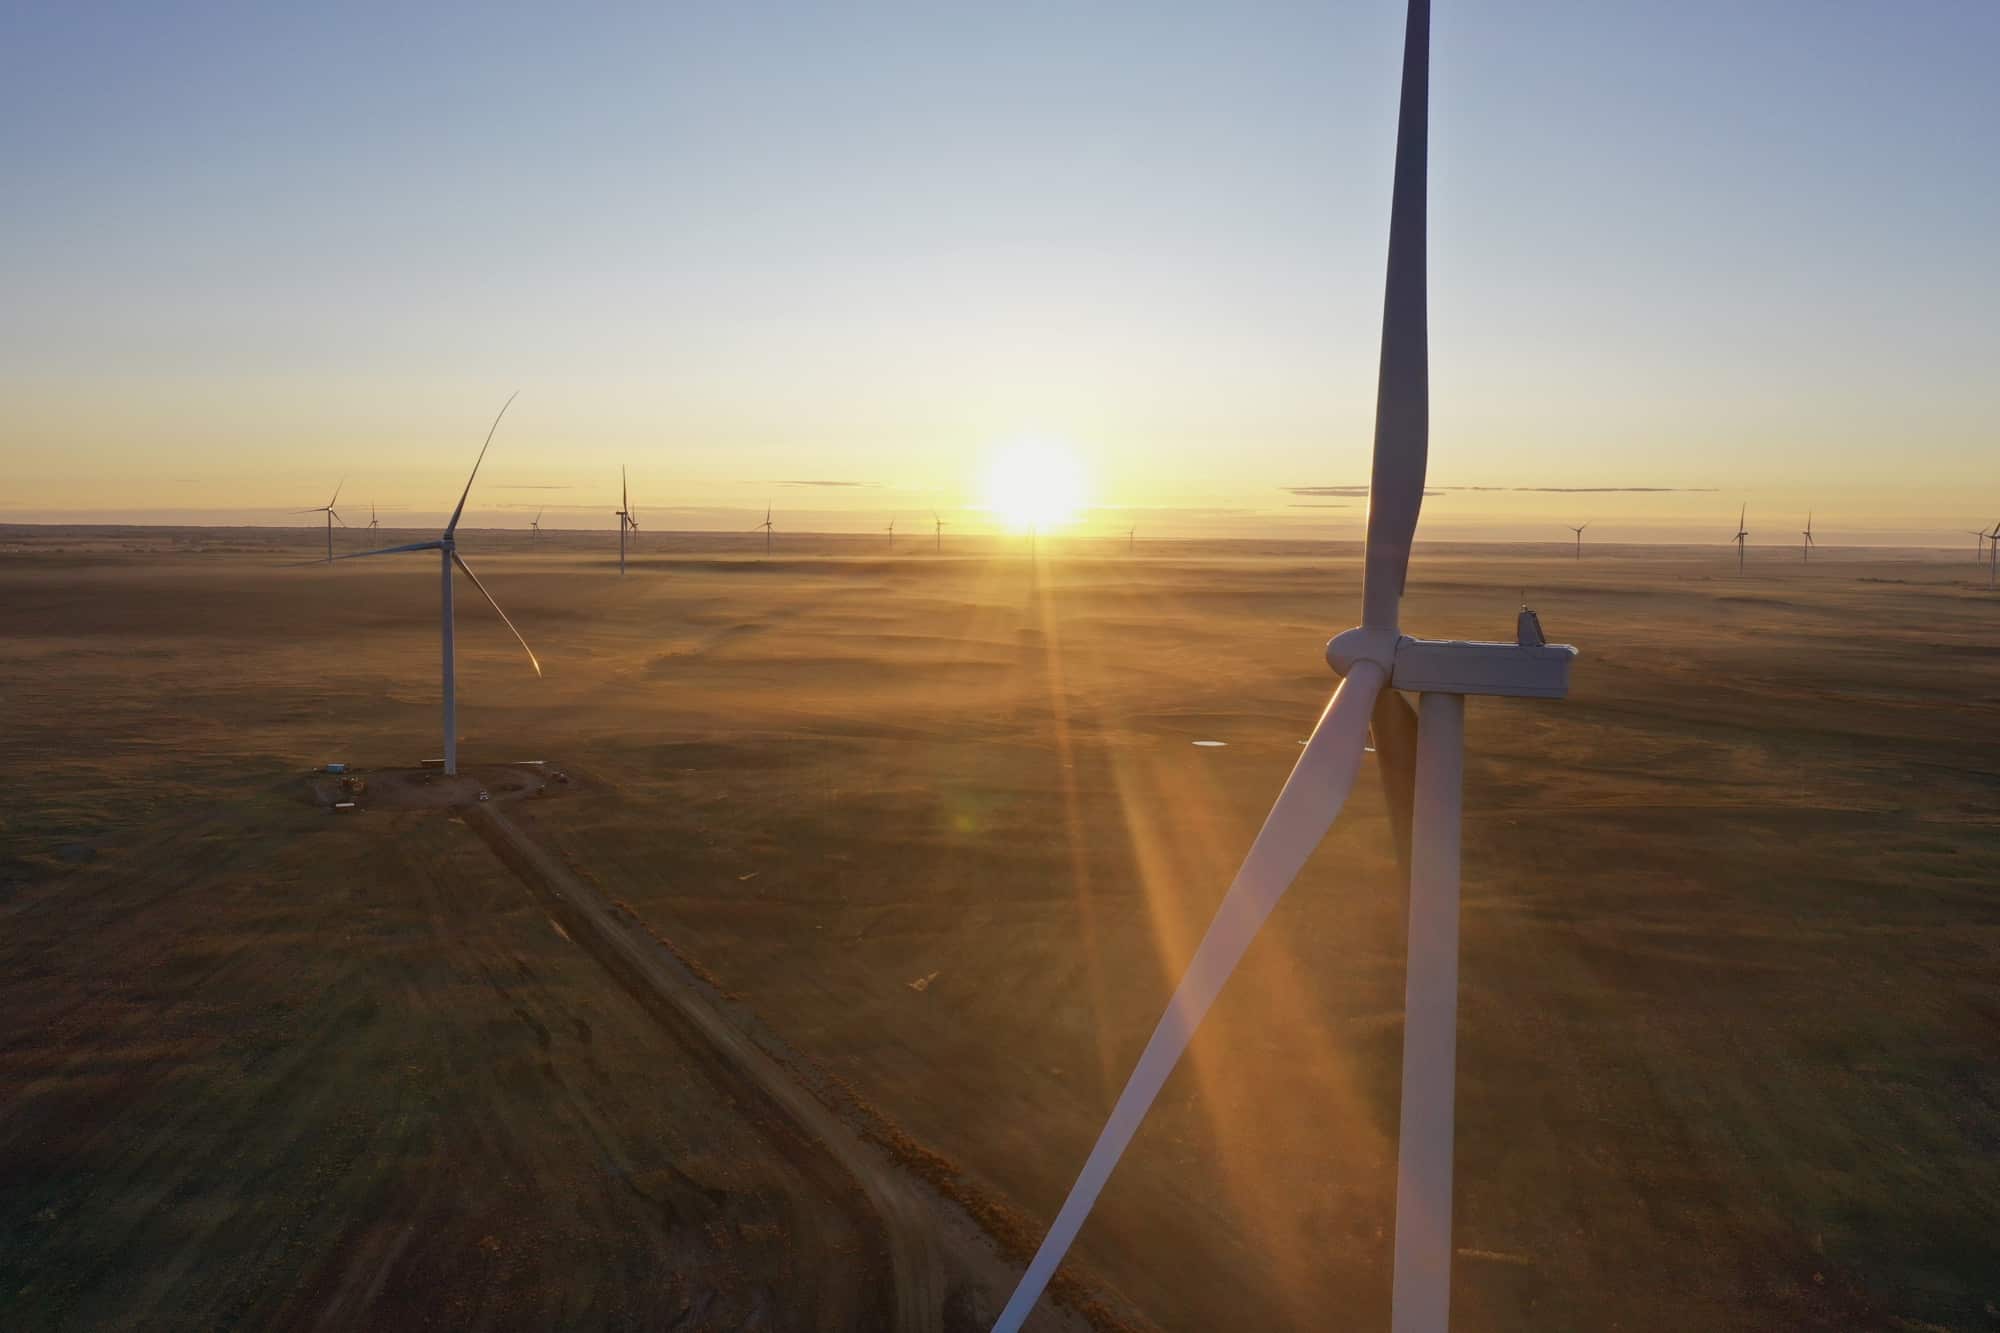 A landscape photo of a wind farm, the sun is setting casting orange across the field of wind turbines.